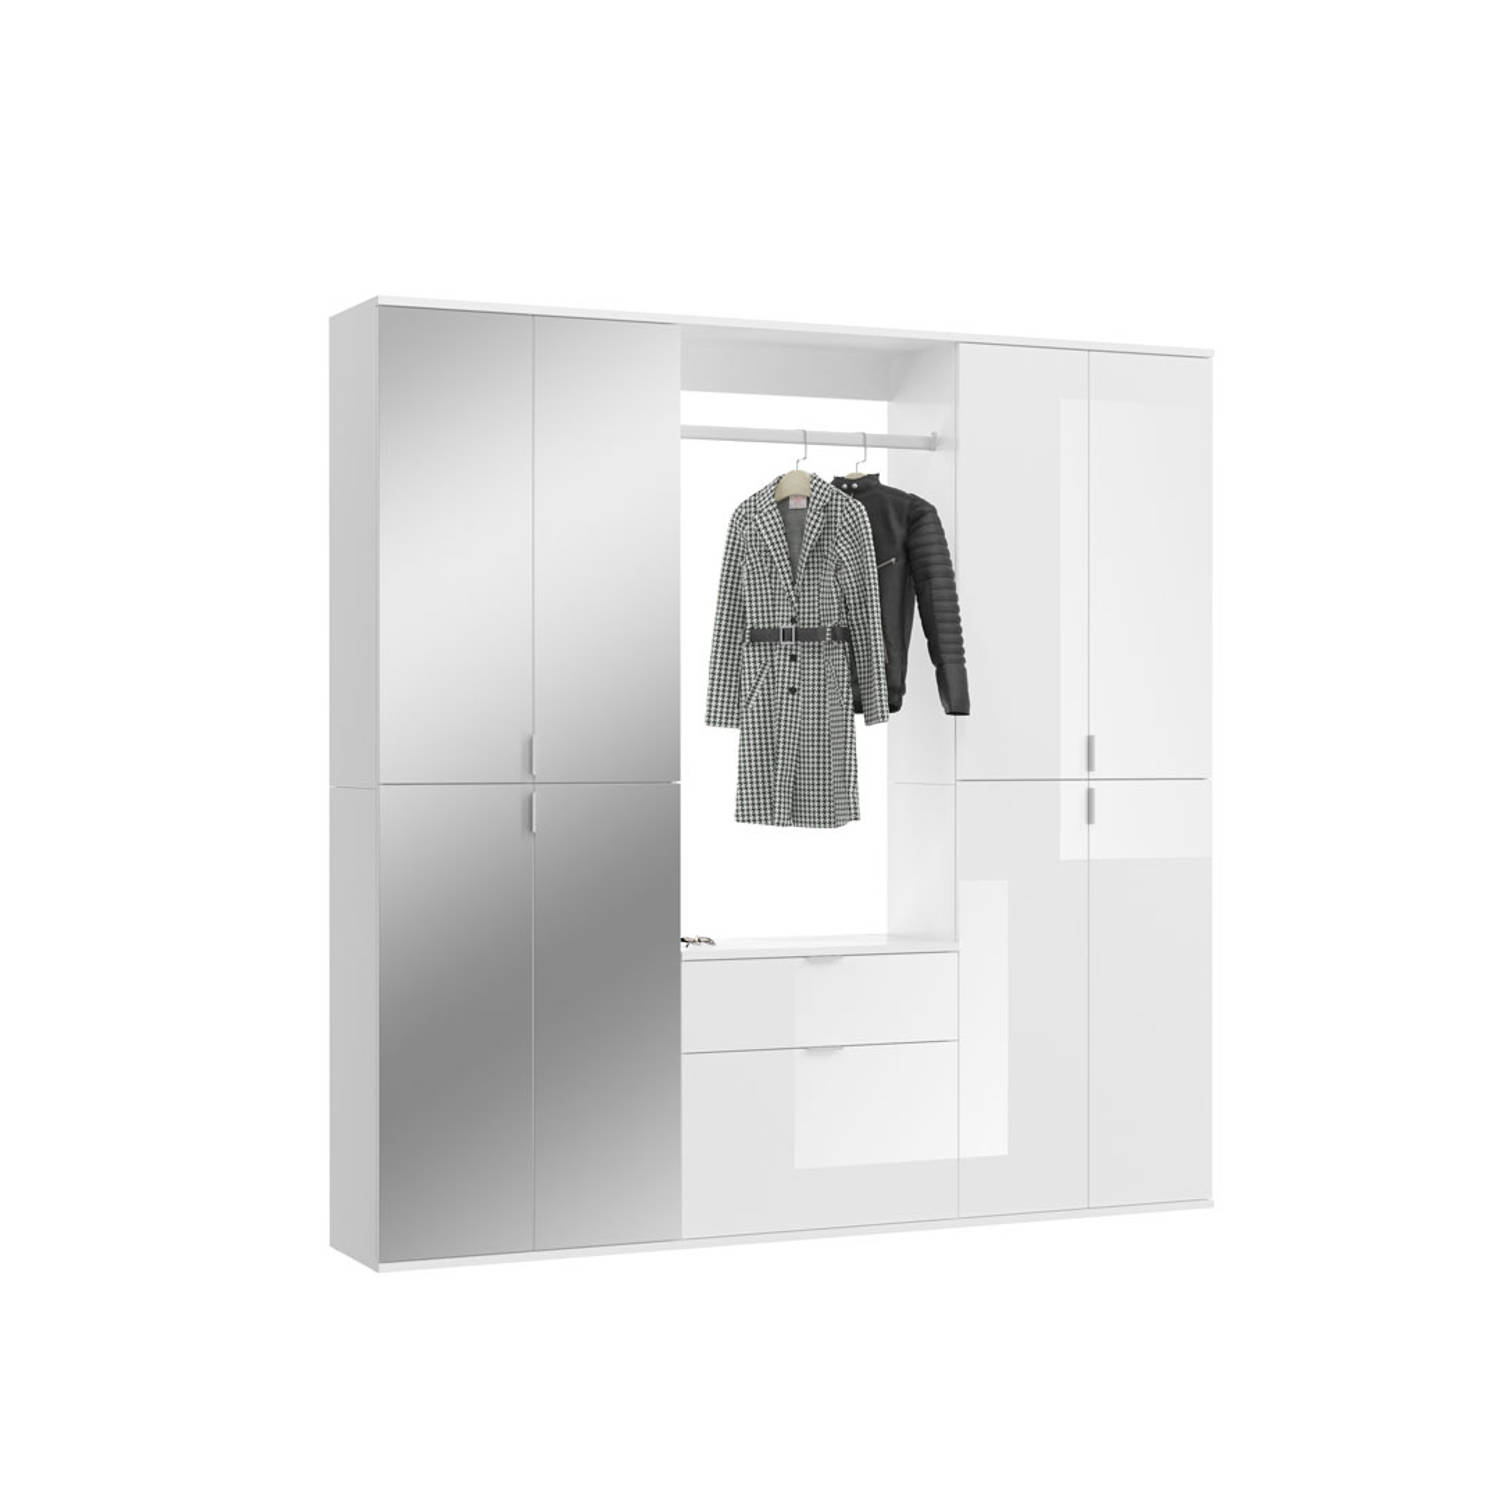 ProjektX garderobe opstelling 9 deuren, 1 lade wit.